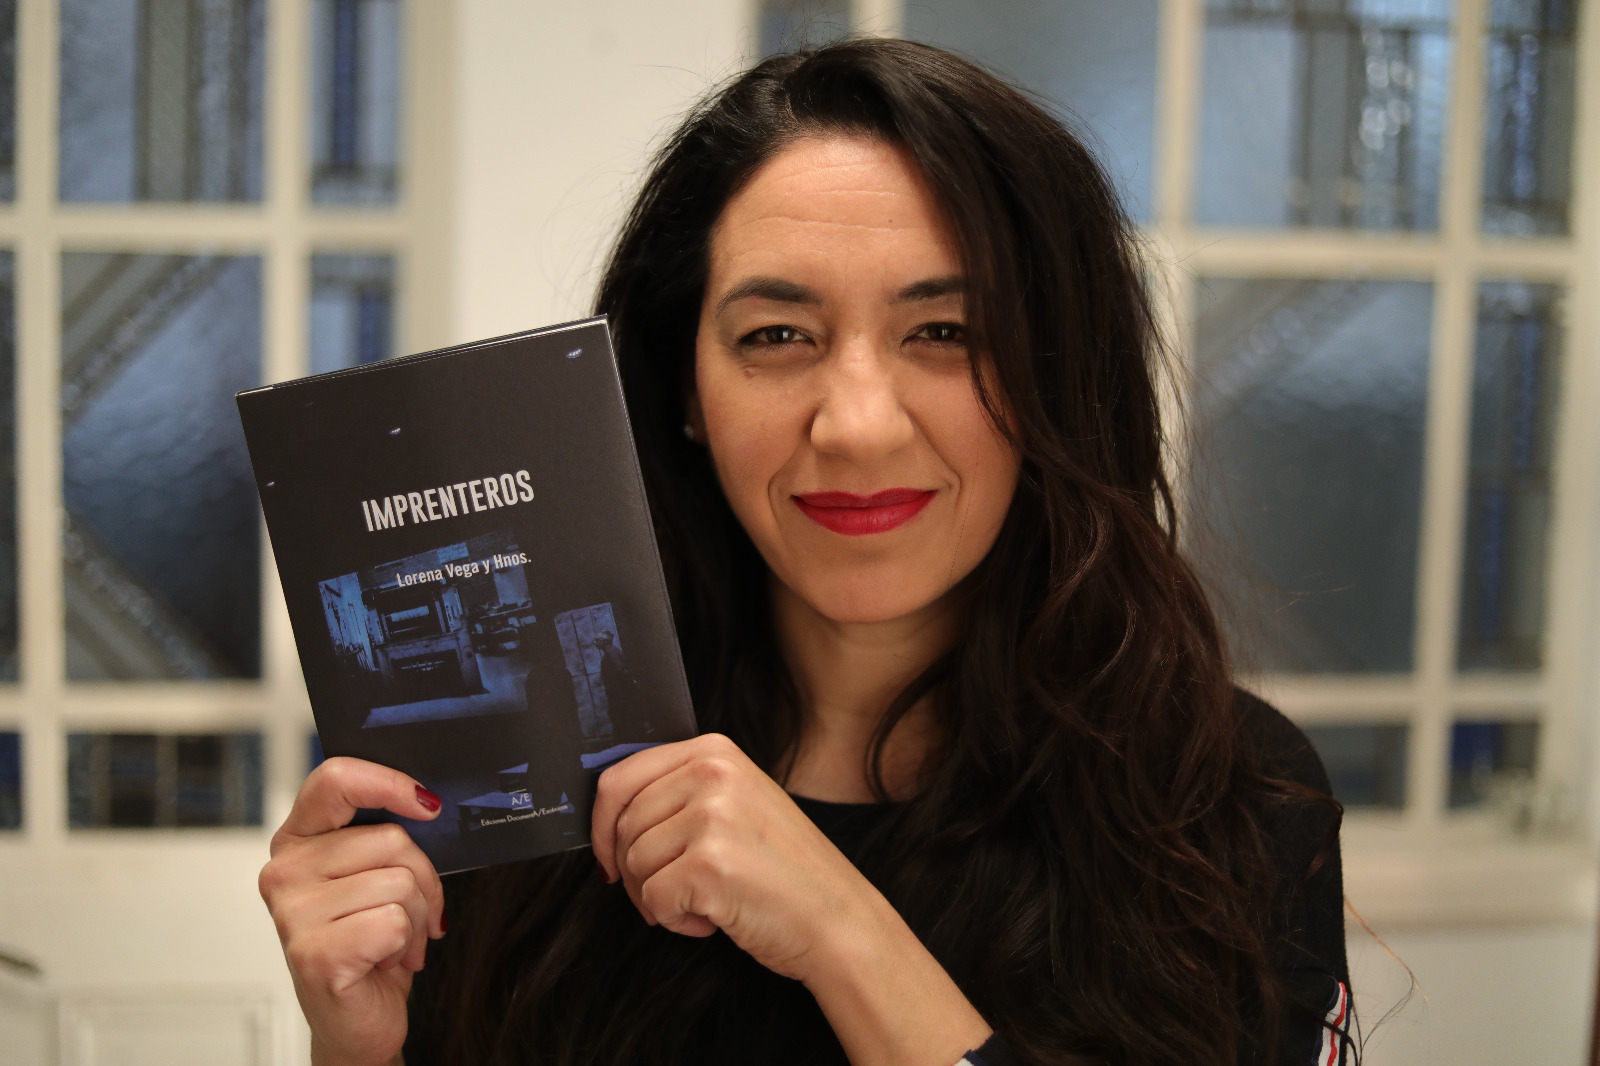 Lorena Vega con el libro “Imprenteros”. Foto de Gonzalo Javier Zapico. Gentileza Lorena Vega.